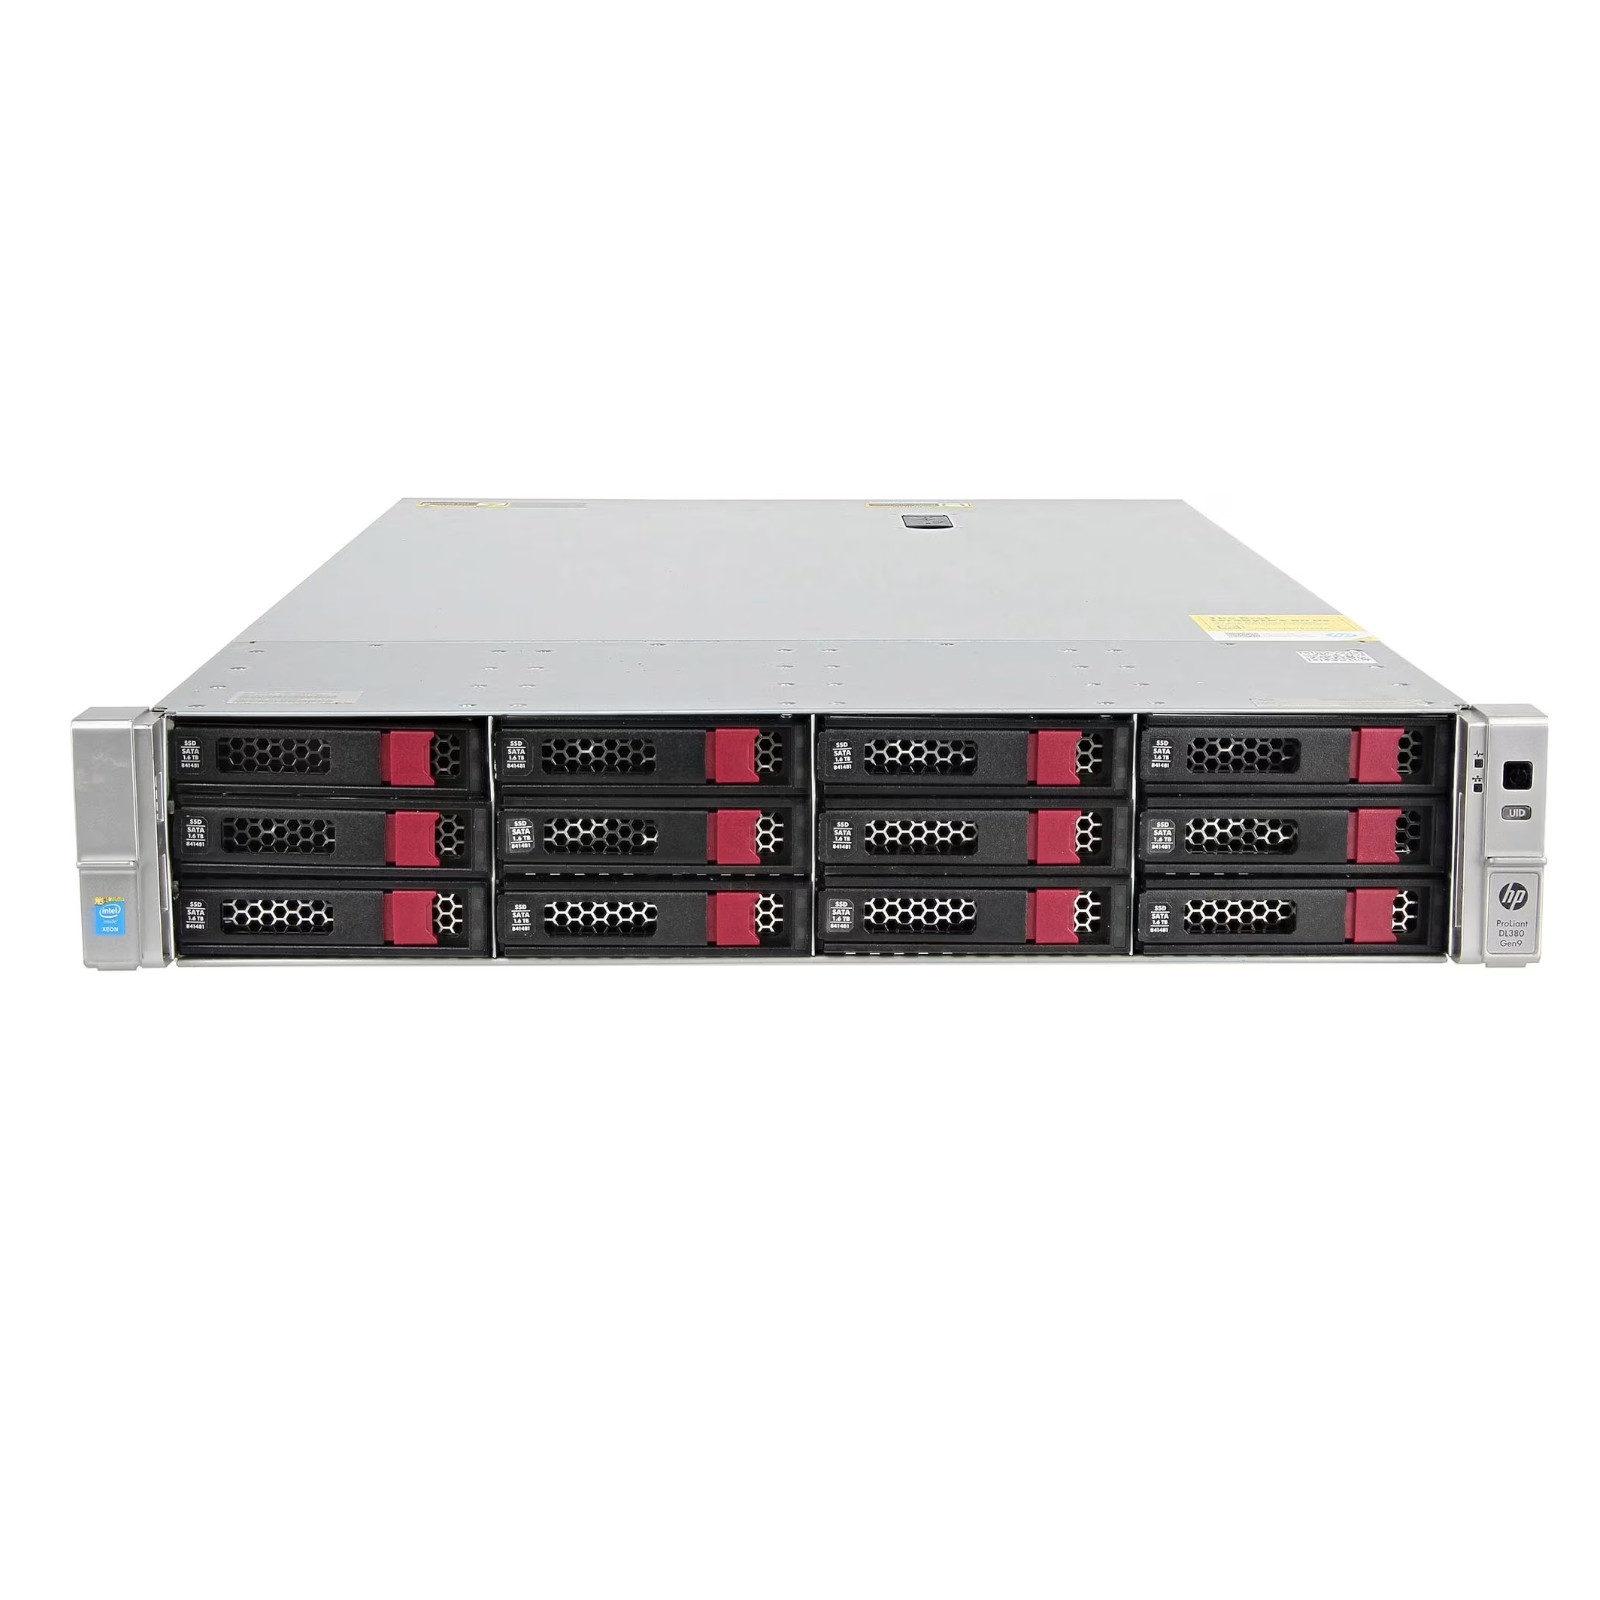 HPE ProLiant DL380 Gen9 12LFF Configurable: E5-2600 v4 12-Core, 128GB RAM, P840